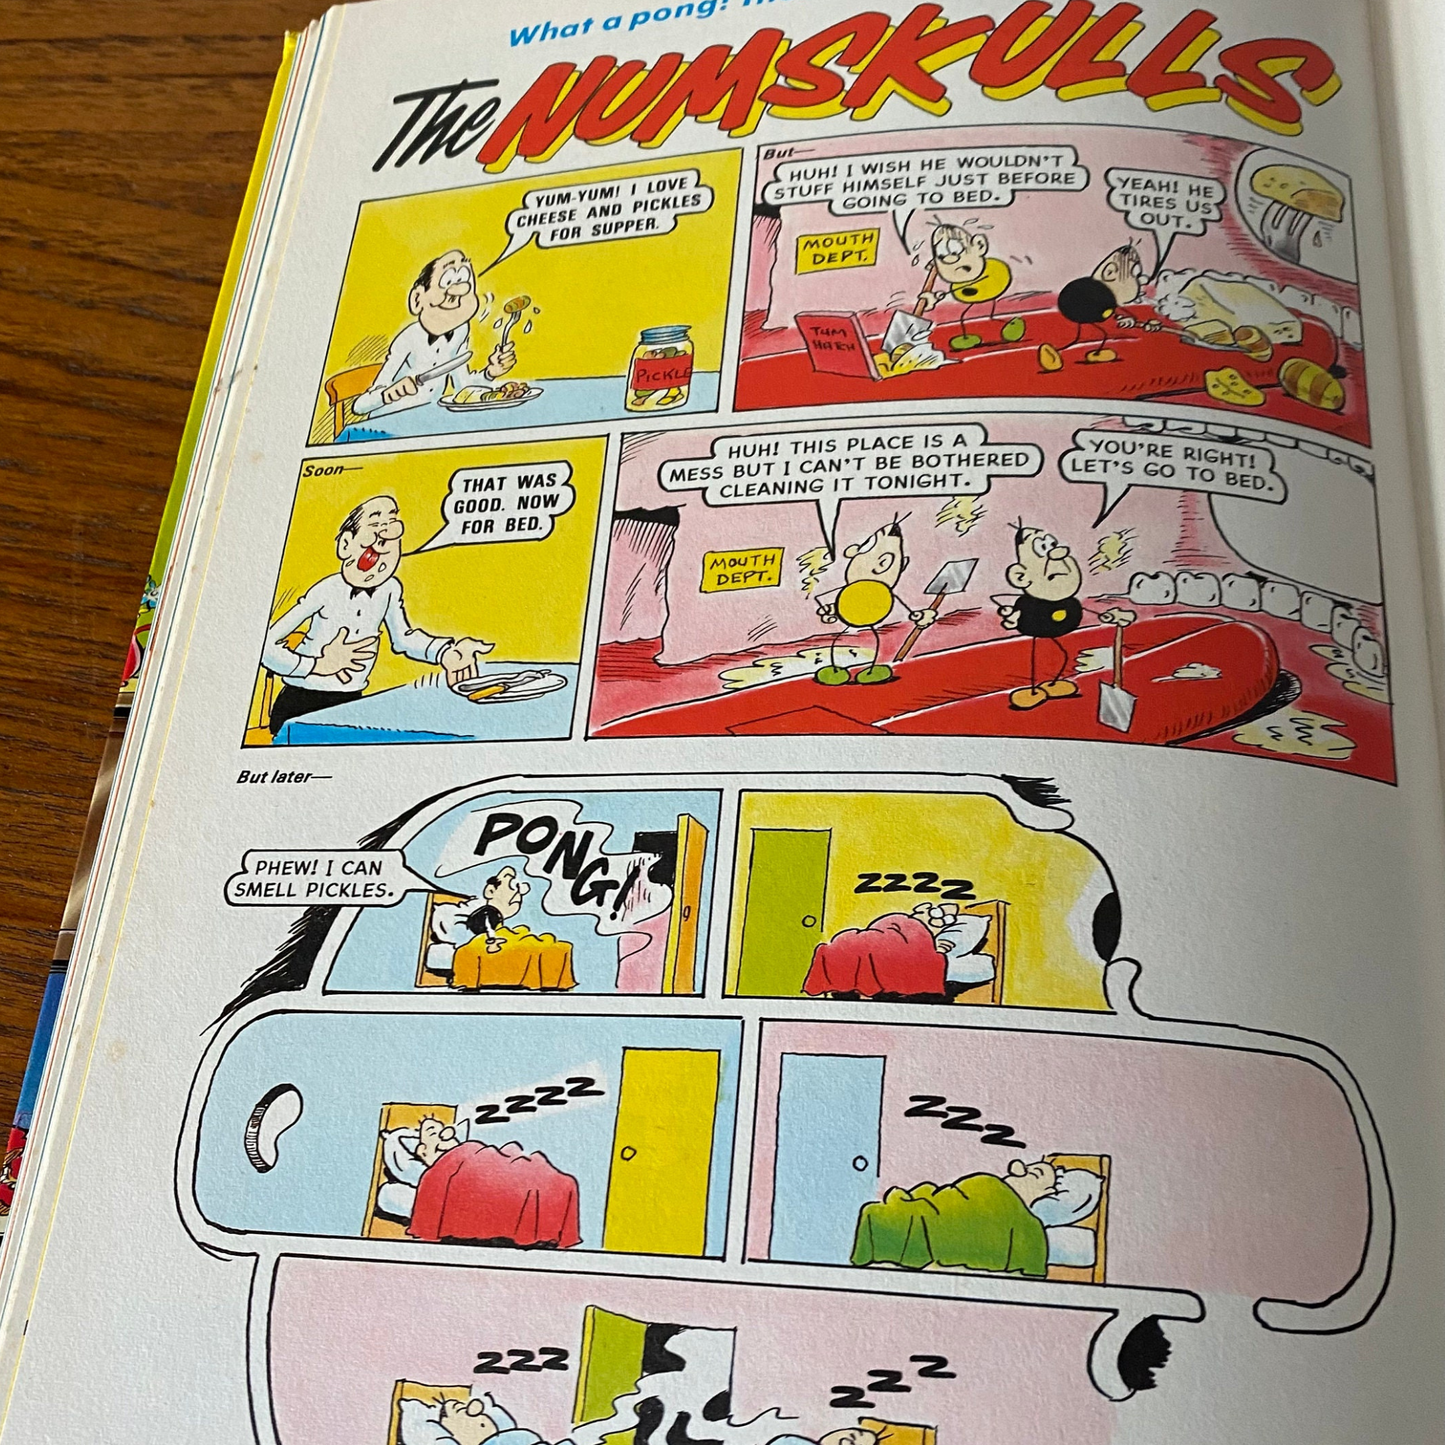 Vintage Beezer Book 1985. Children’s comic annual. Great nostalgic gift idea.